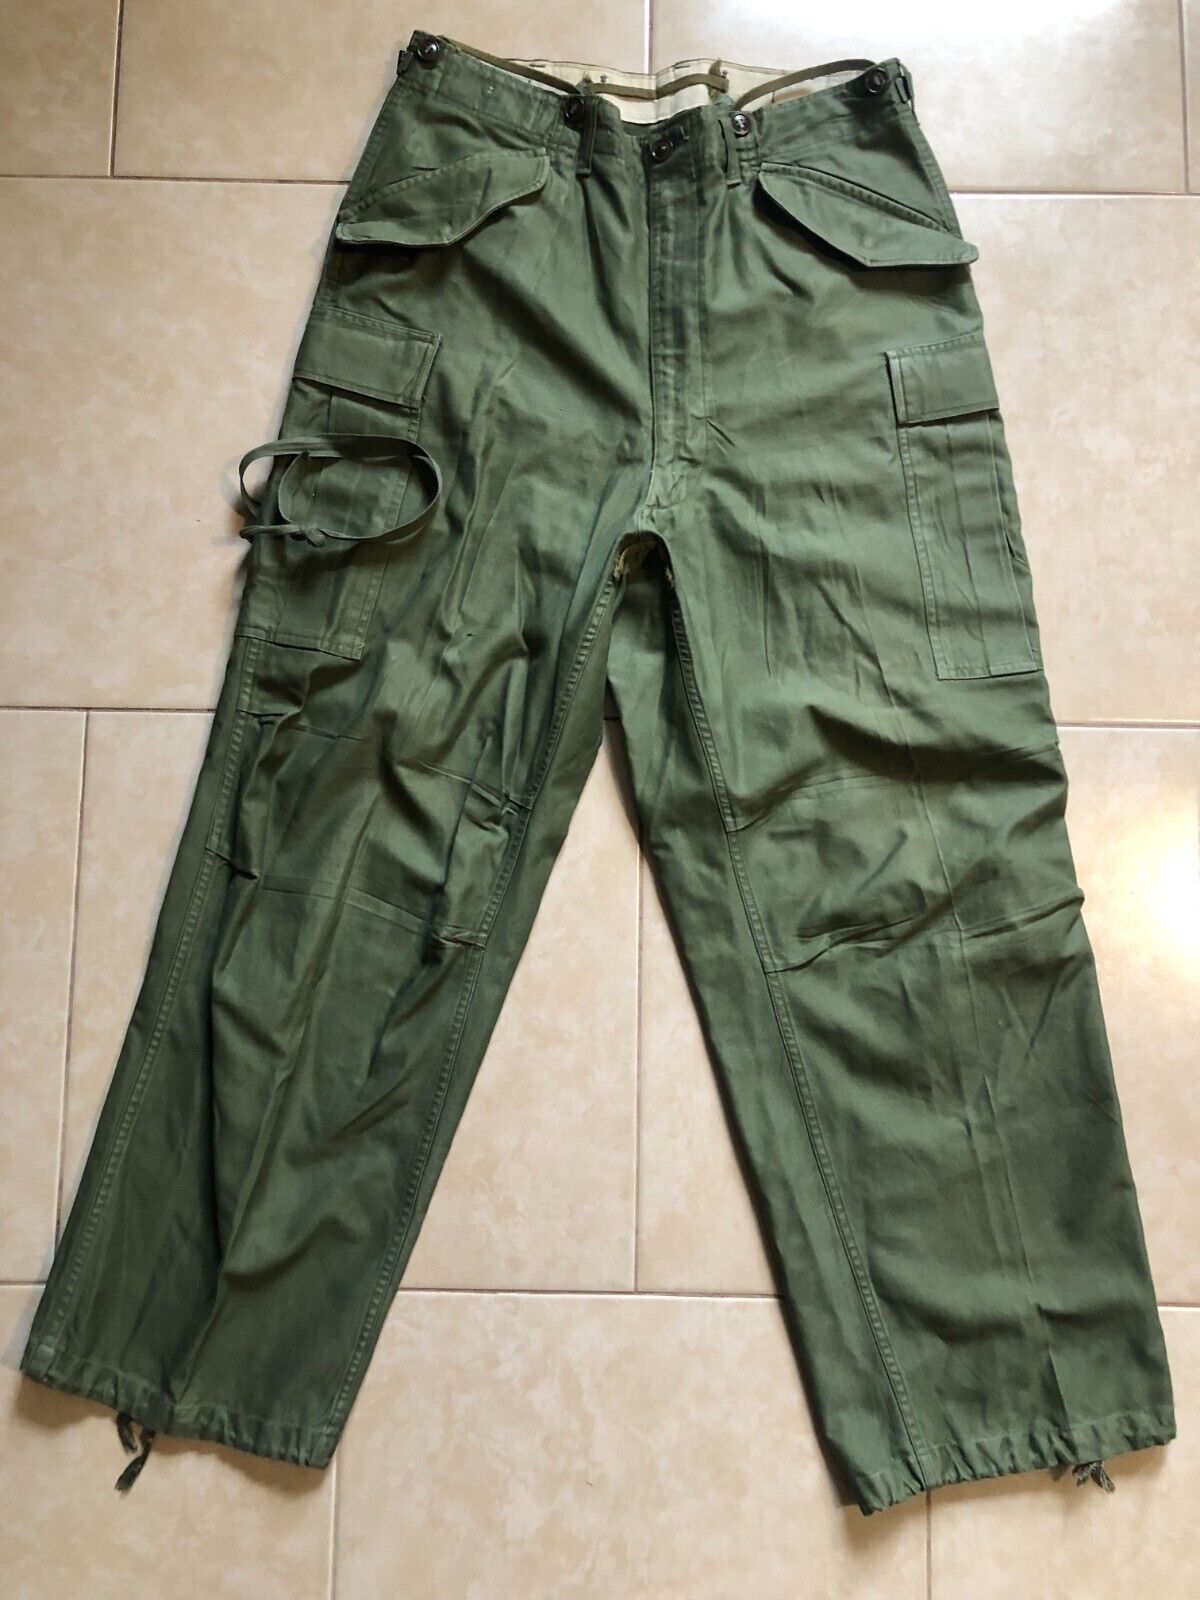 VTG M51 OD Field Trousers Pants M-1951 Cargo Pants, Size 34 x 29 / CONMAR Zipper